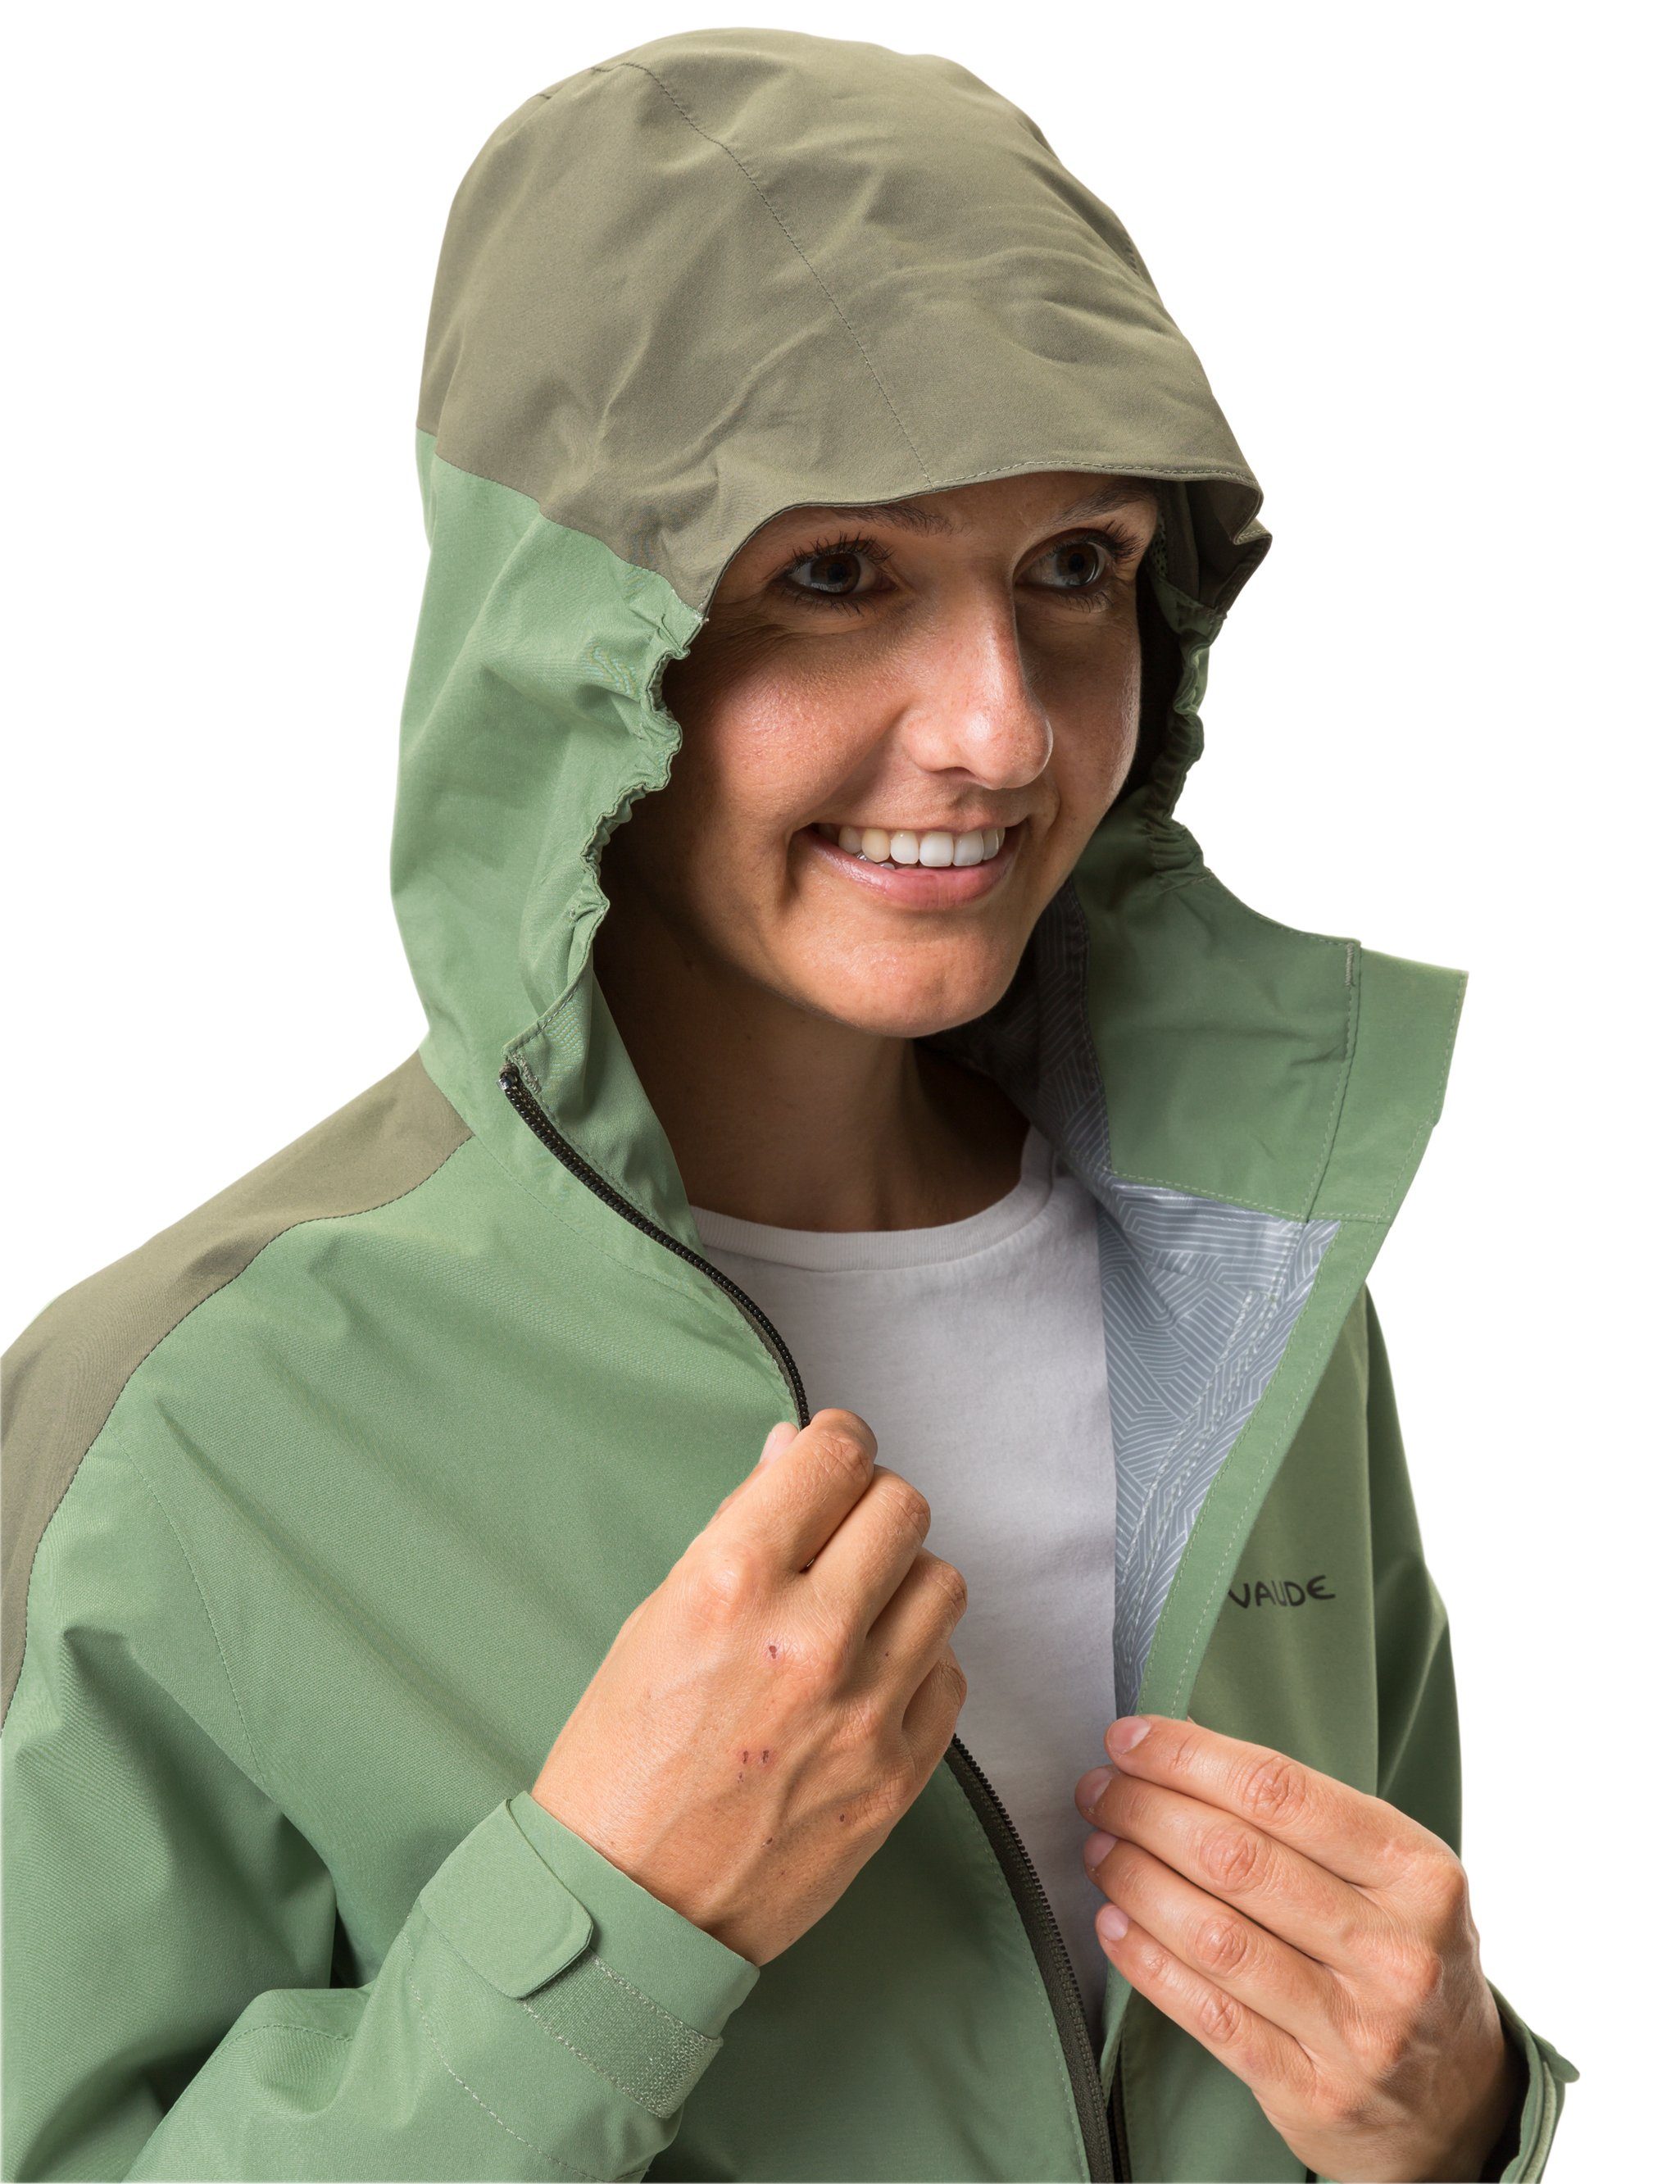 Outdoorjacke II Jacket kompensiert willow Women's green Klimaneutral Rain VAUDE Moab (1-St)